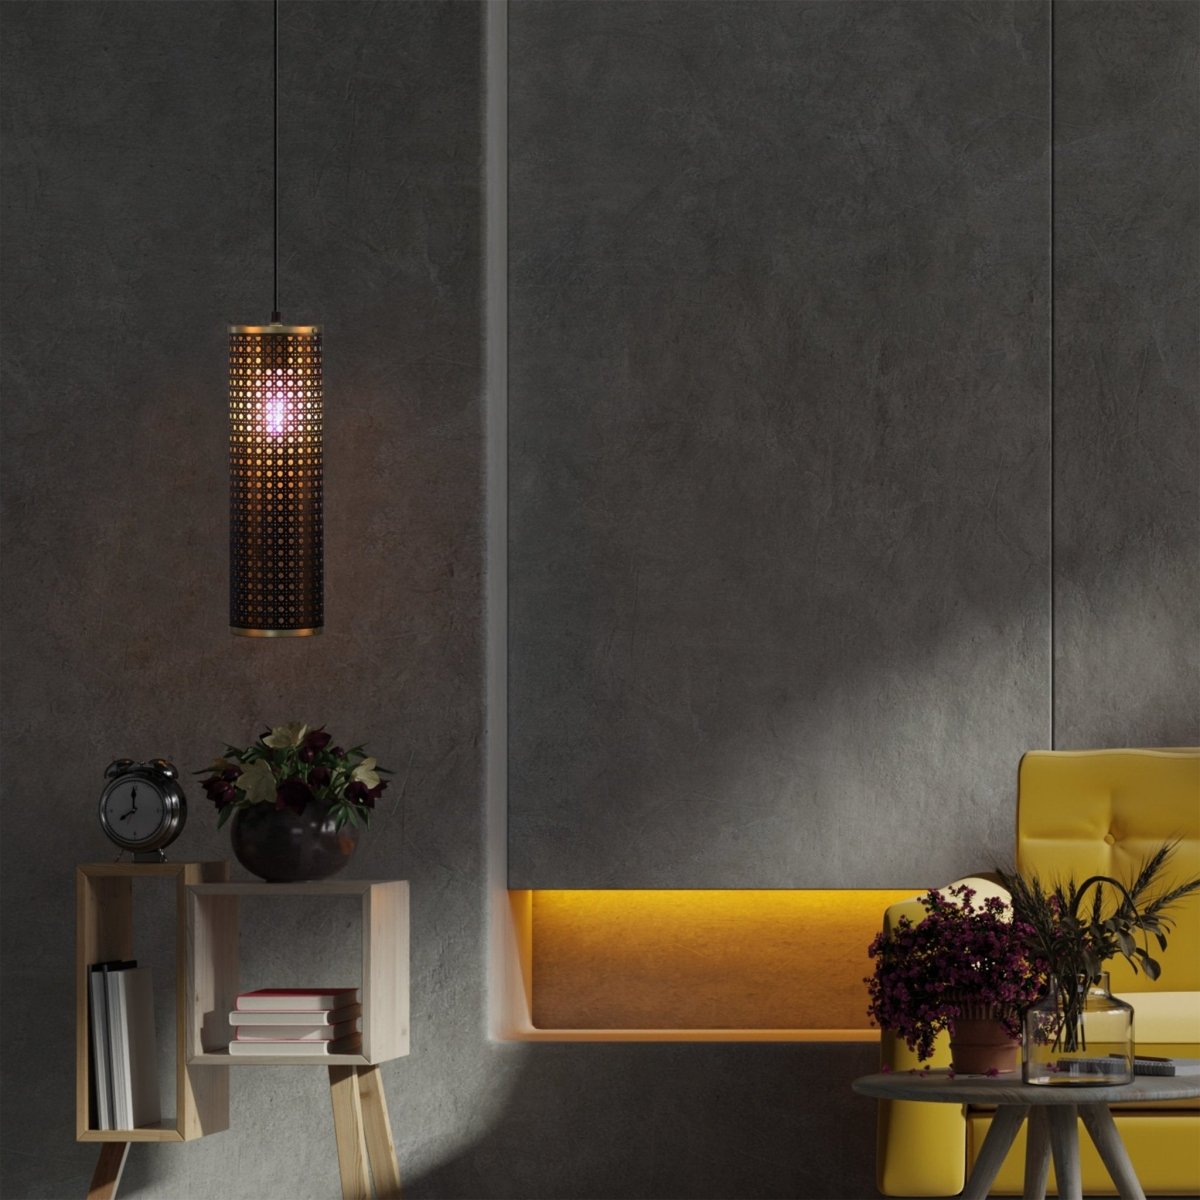 Kezevel Metal Decor Hanging Light - Black Golden Handcrafted Pendant Light / Lamp for Living Room, Bedroom, Balcony and Foyer